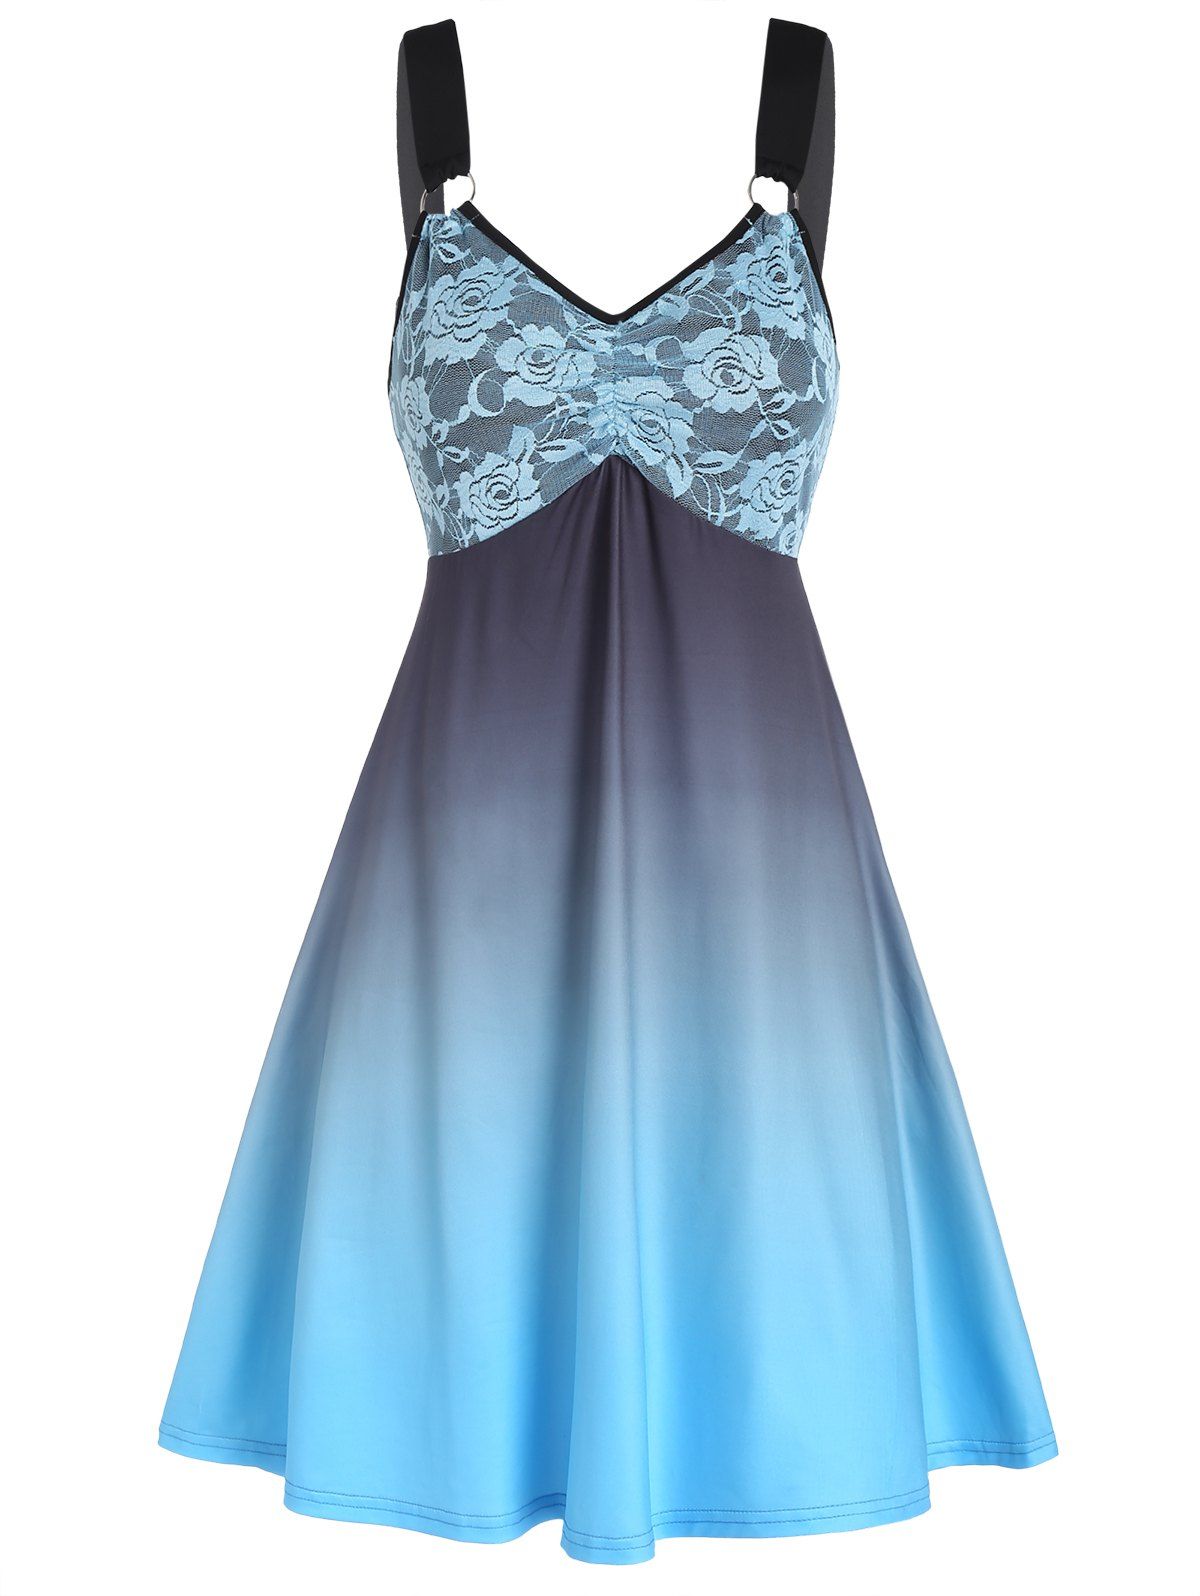 Summer Casual Ombre A Line Mini Dress Empire Waist Rose Lace Panel V Neck Strap Dress - LIGHT BLUE XXL